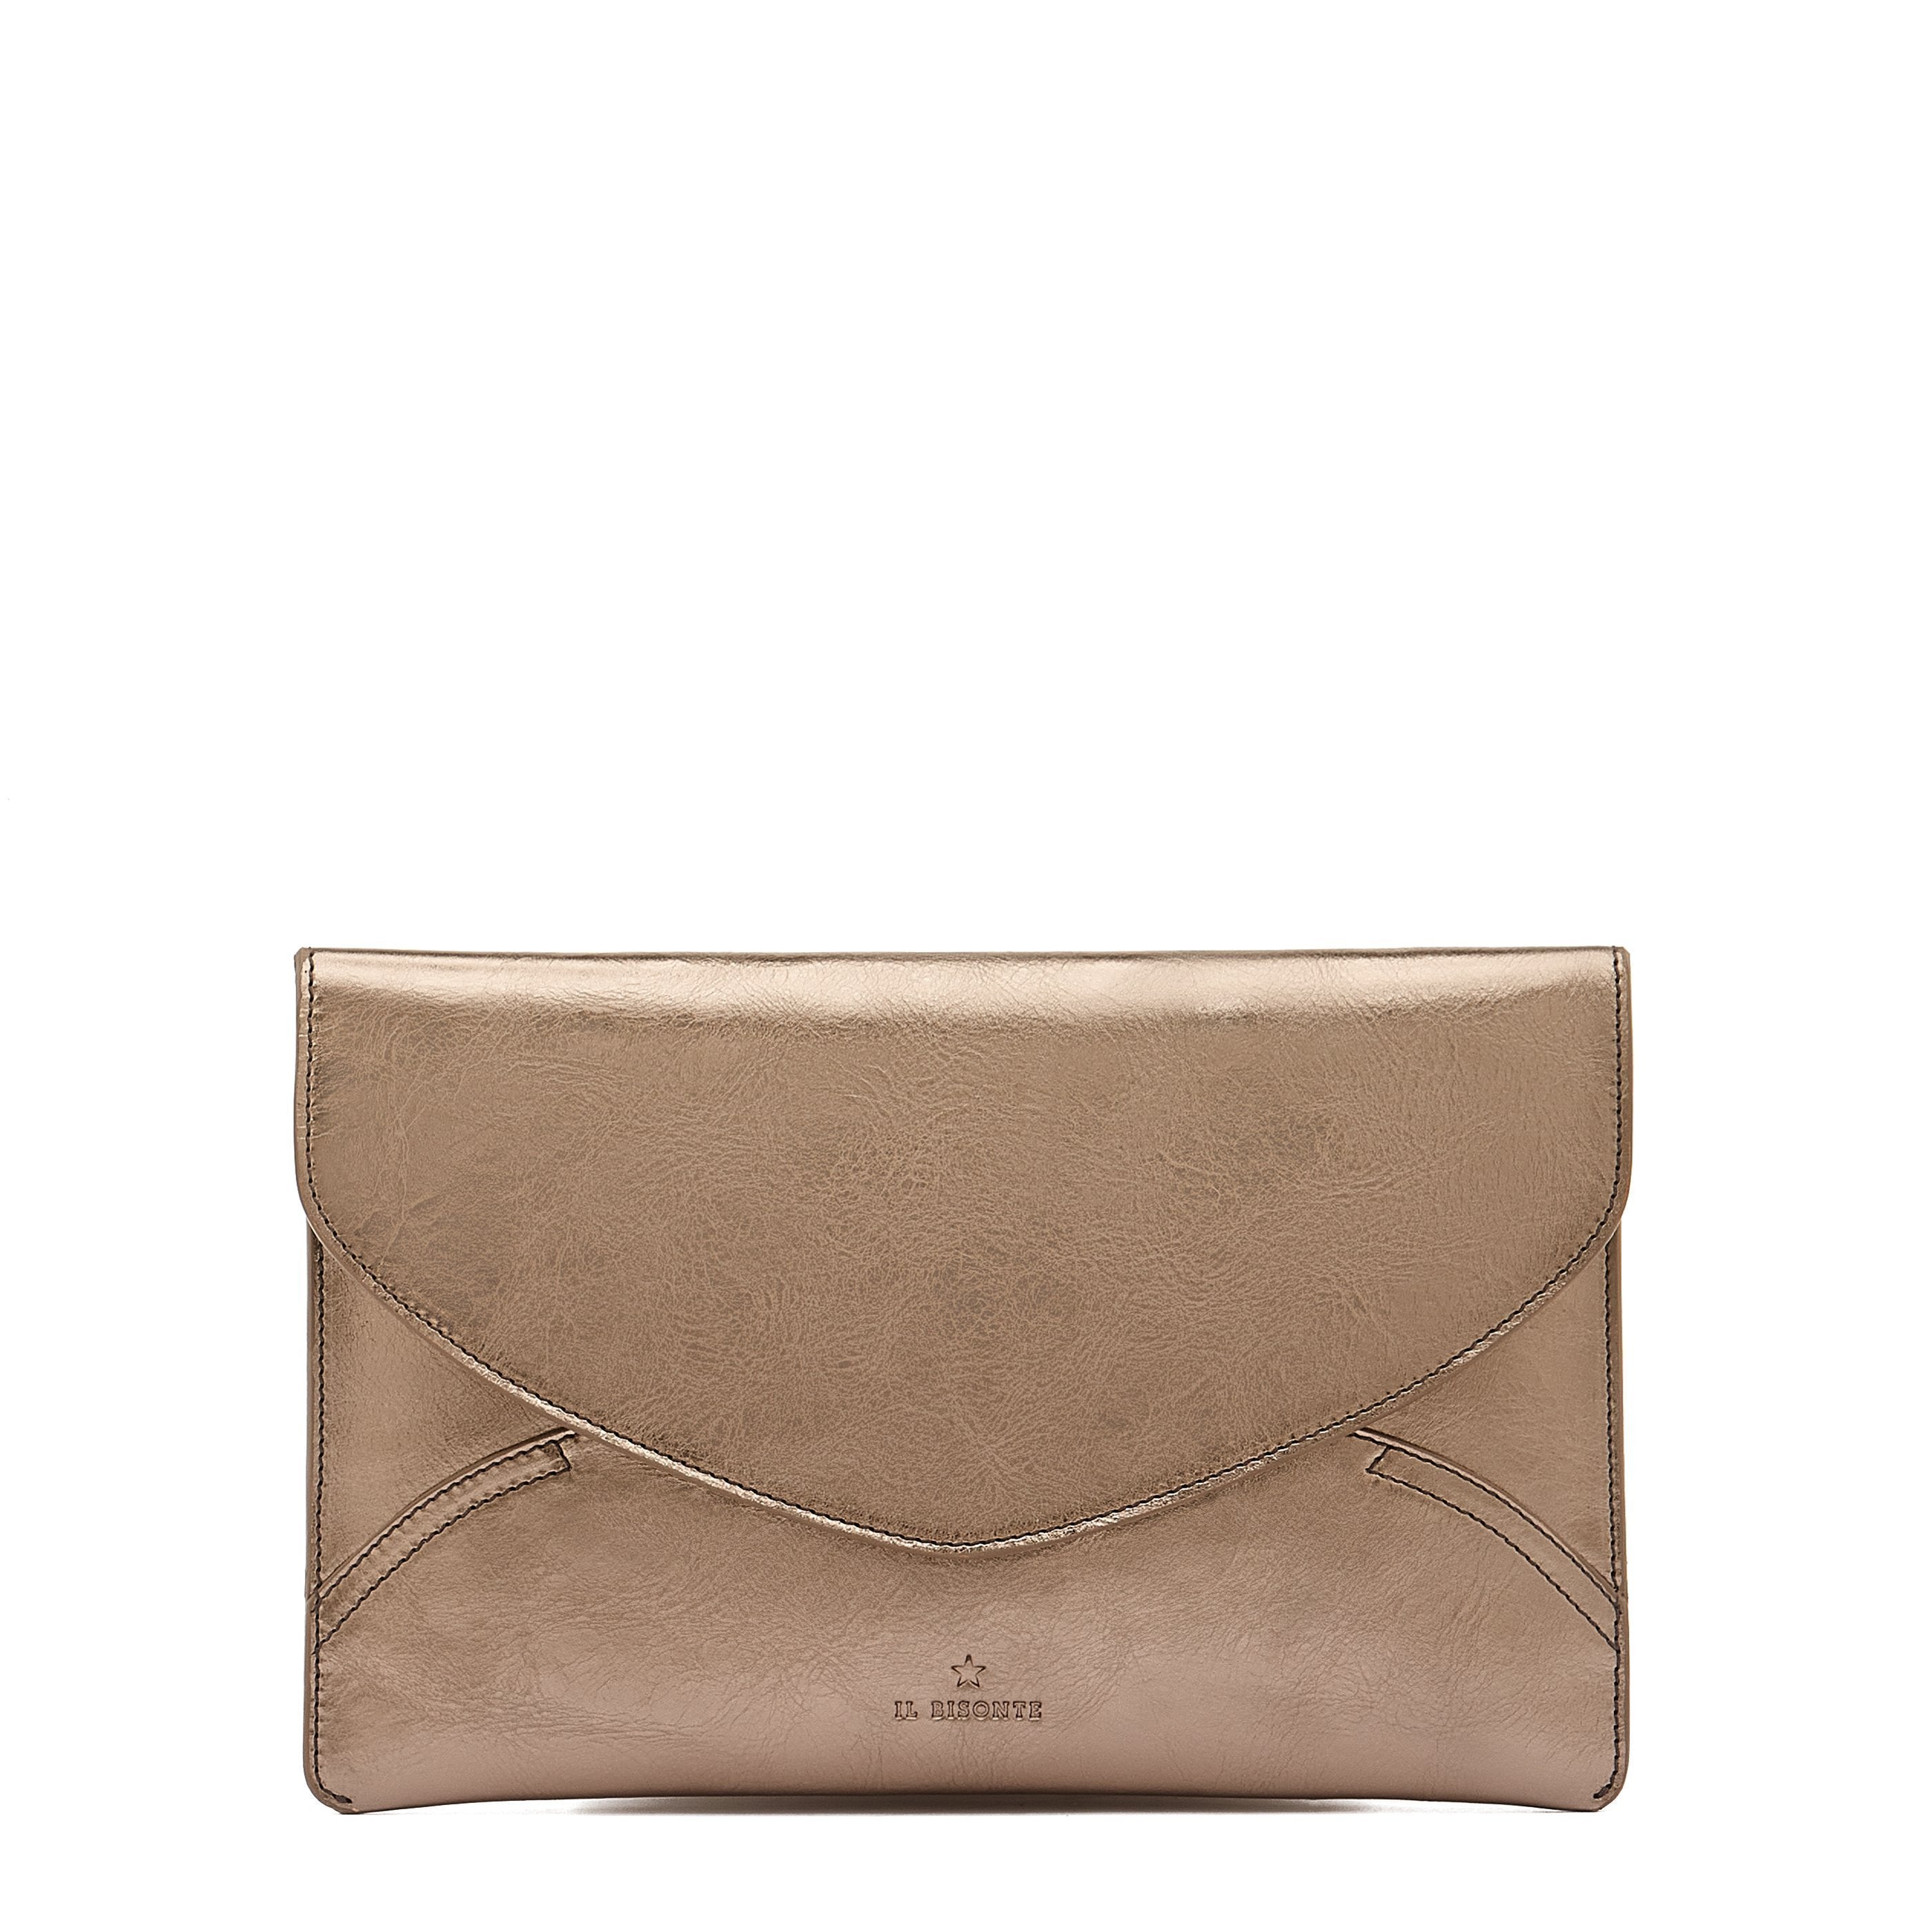 Esperia | Women's Clutch Bag in Metallic Leather color Metallic Bronze